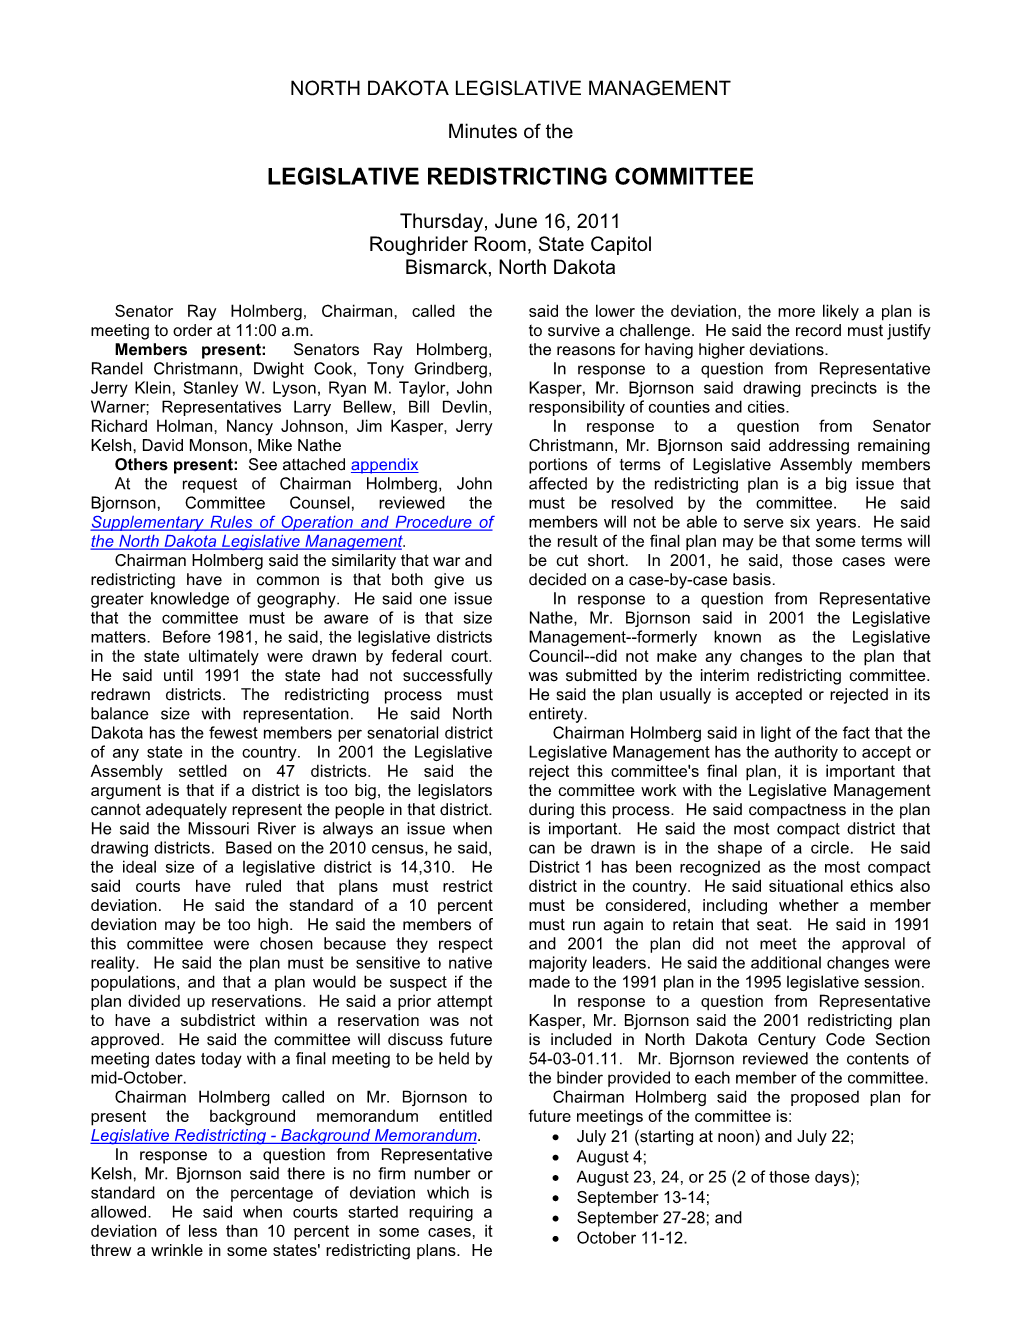 Legislative Redistricting Committee